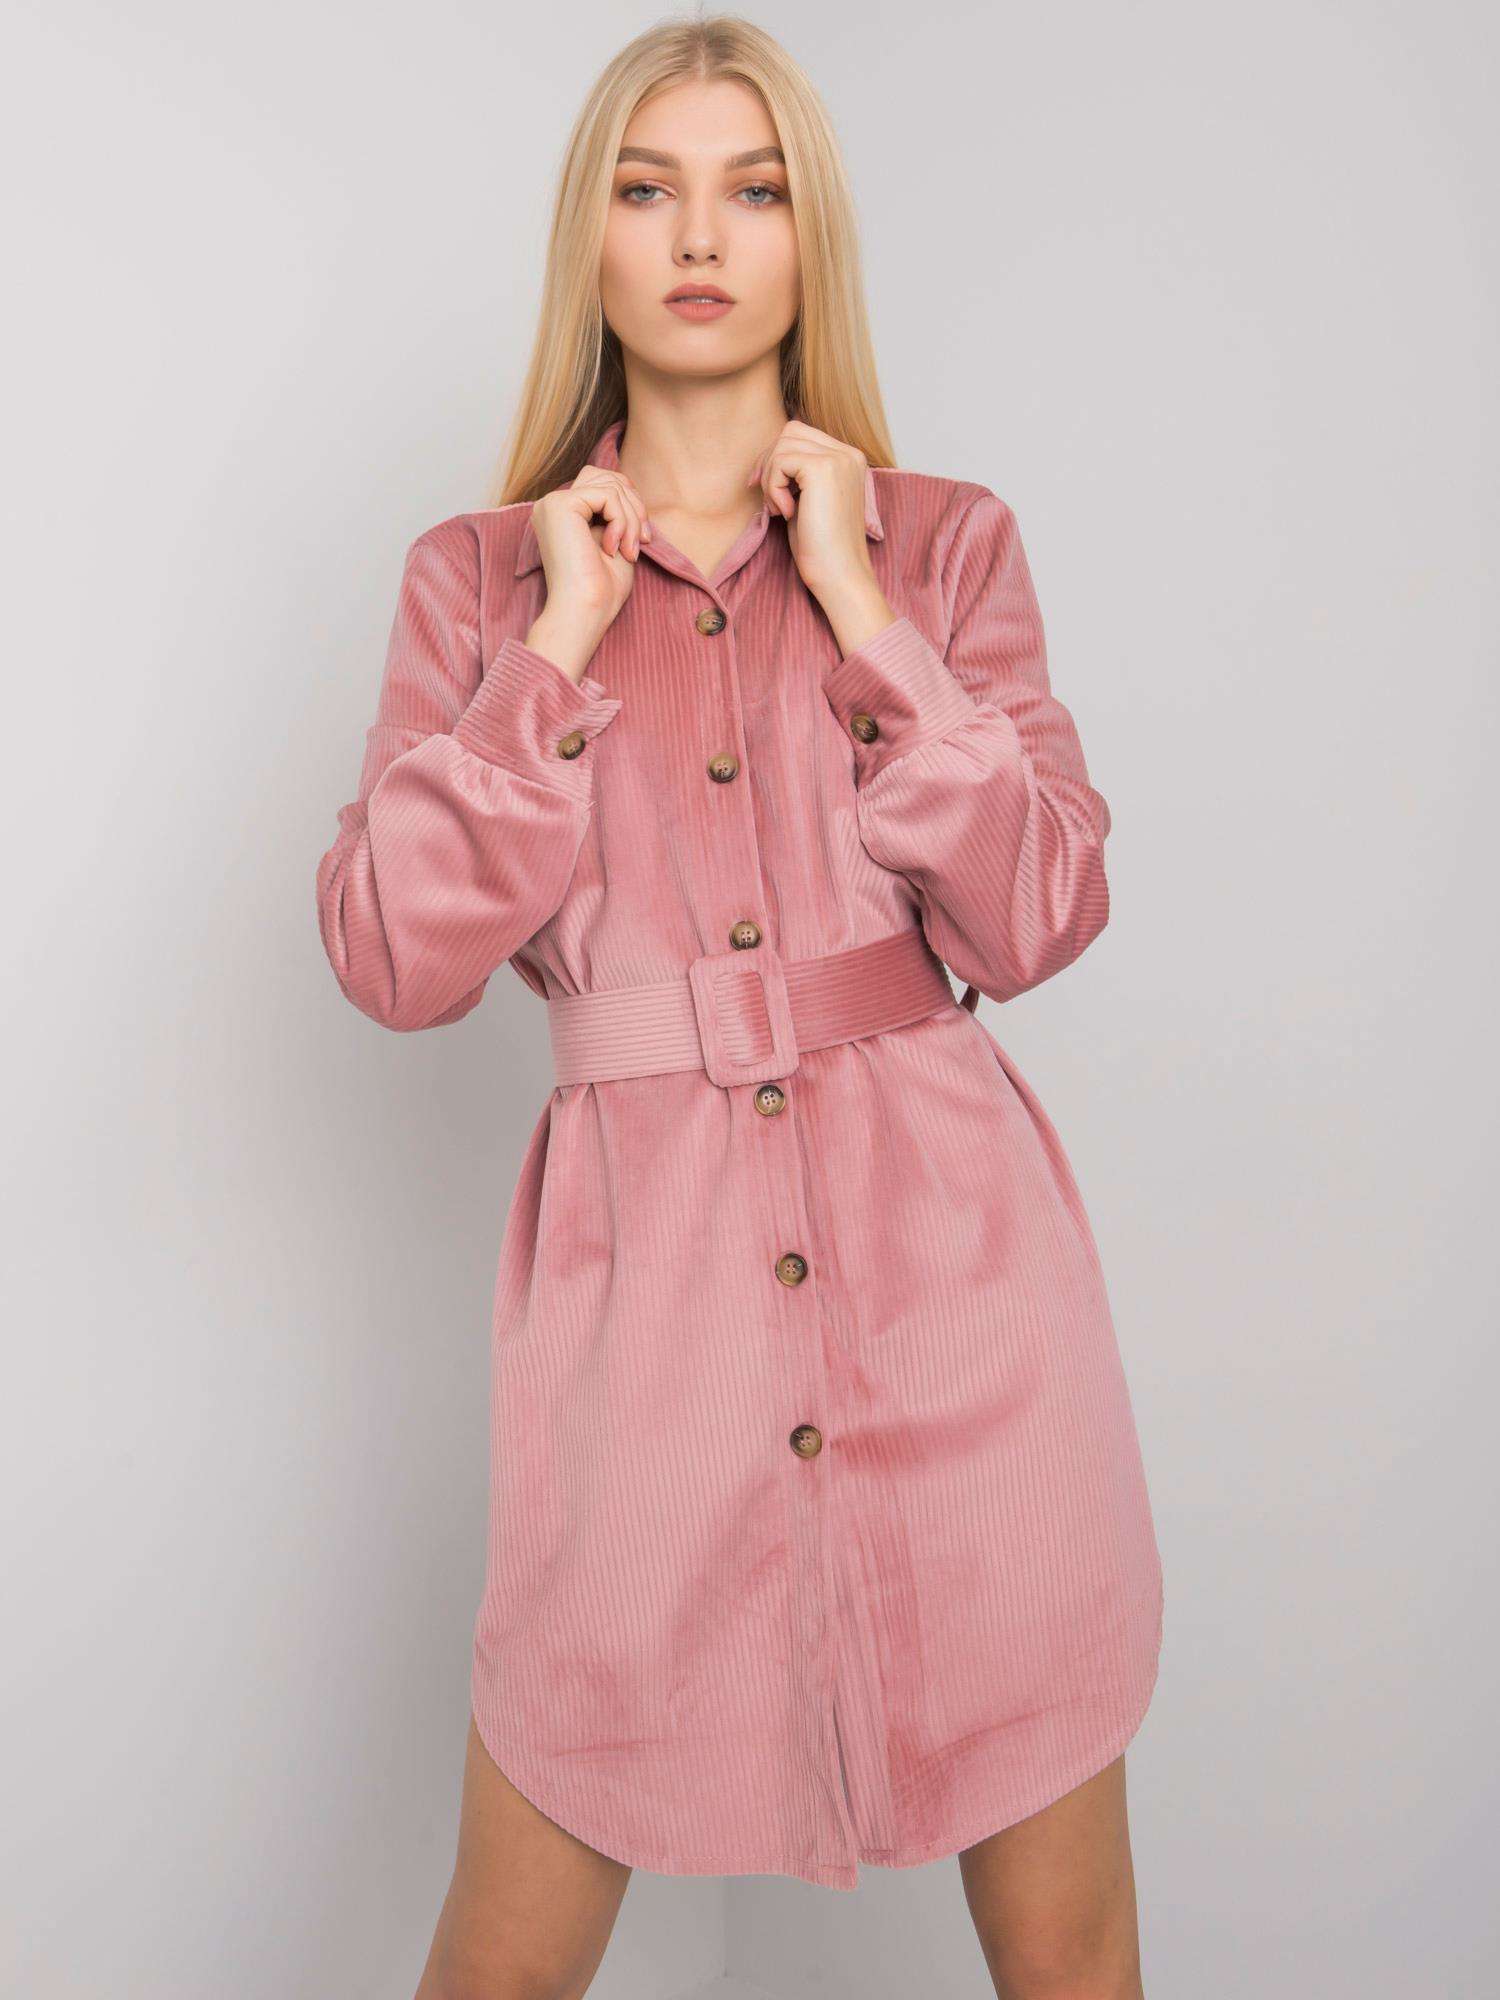 Dusty pink button dress